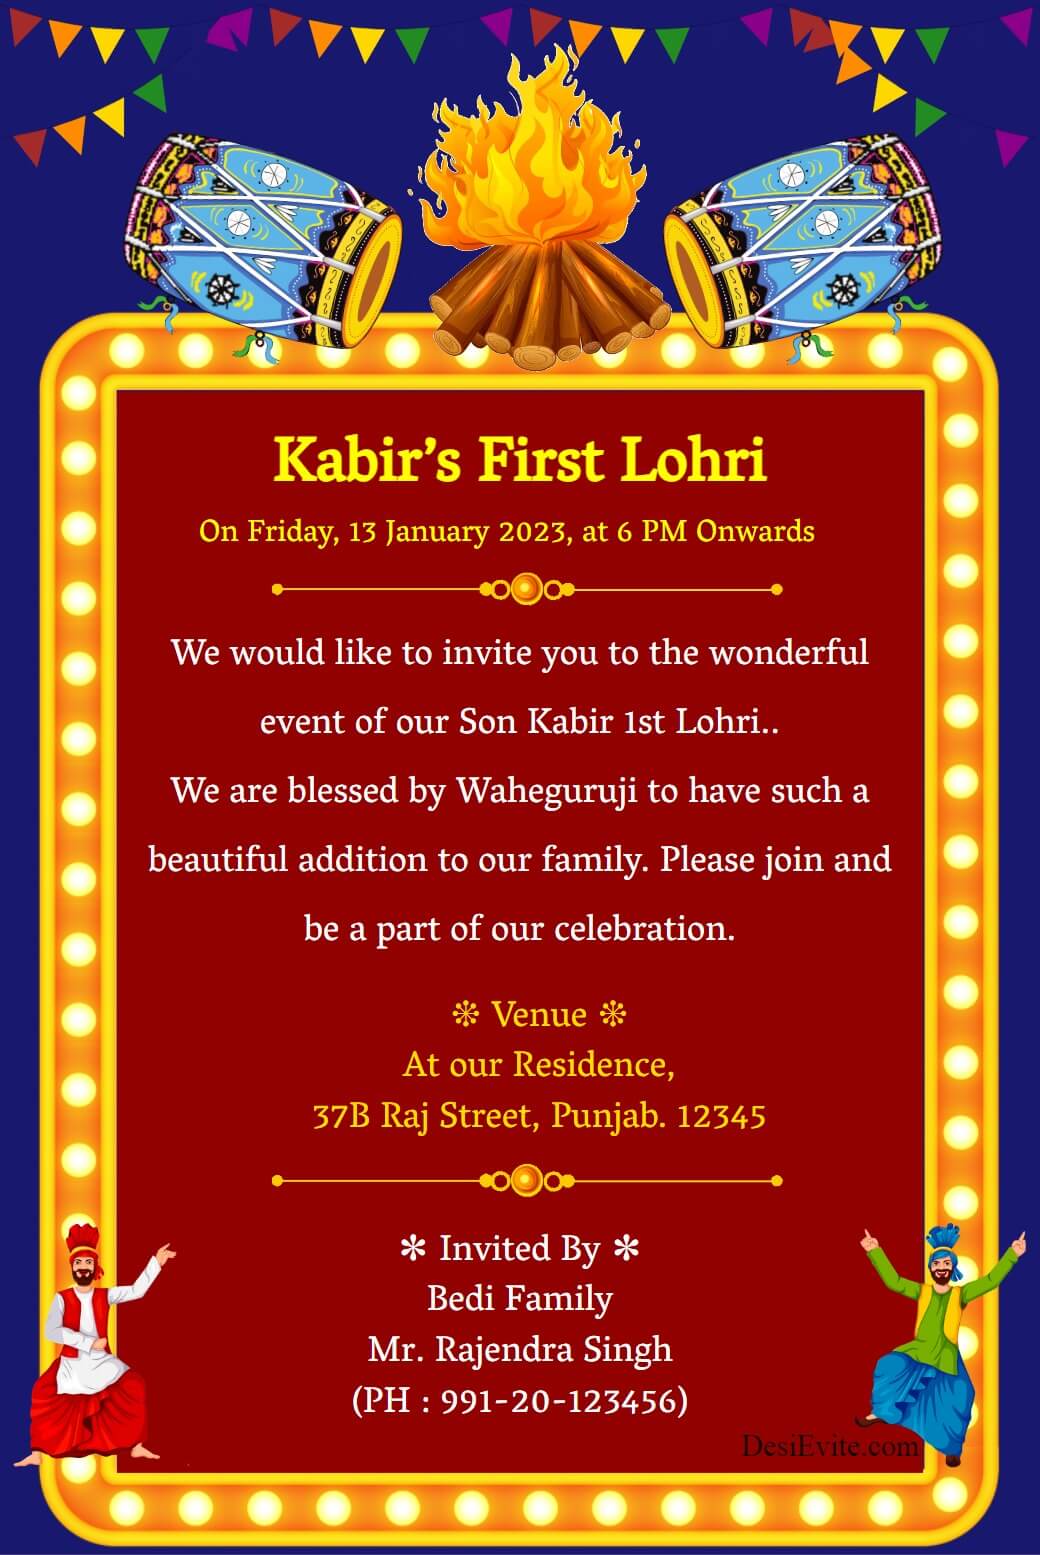 lohri-celebration-invitation-card-with-dhol